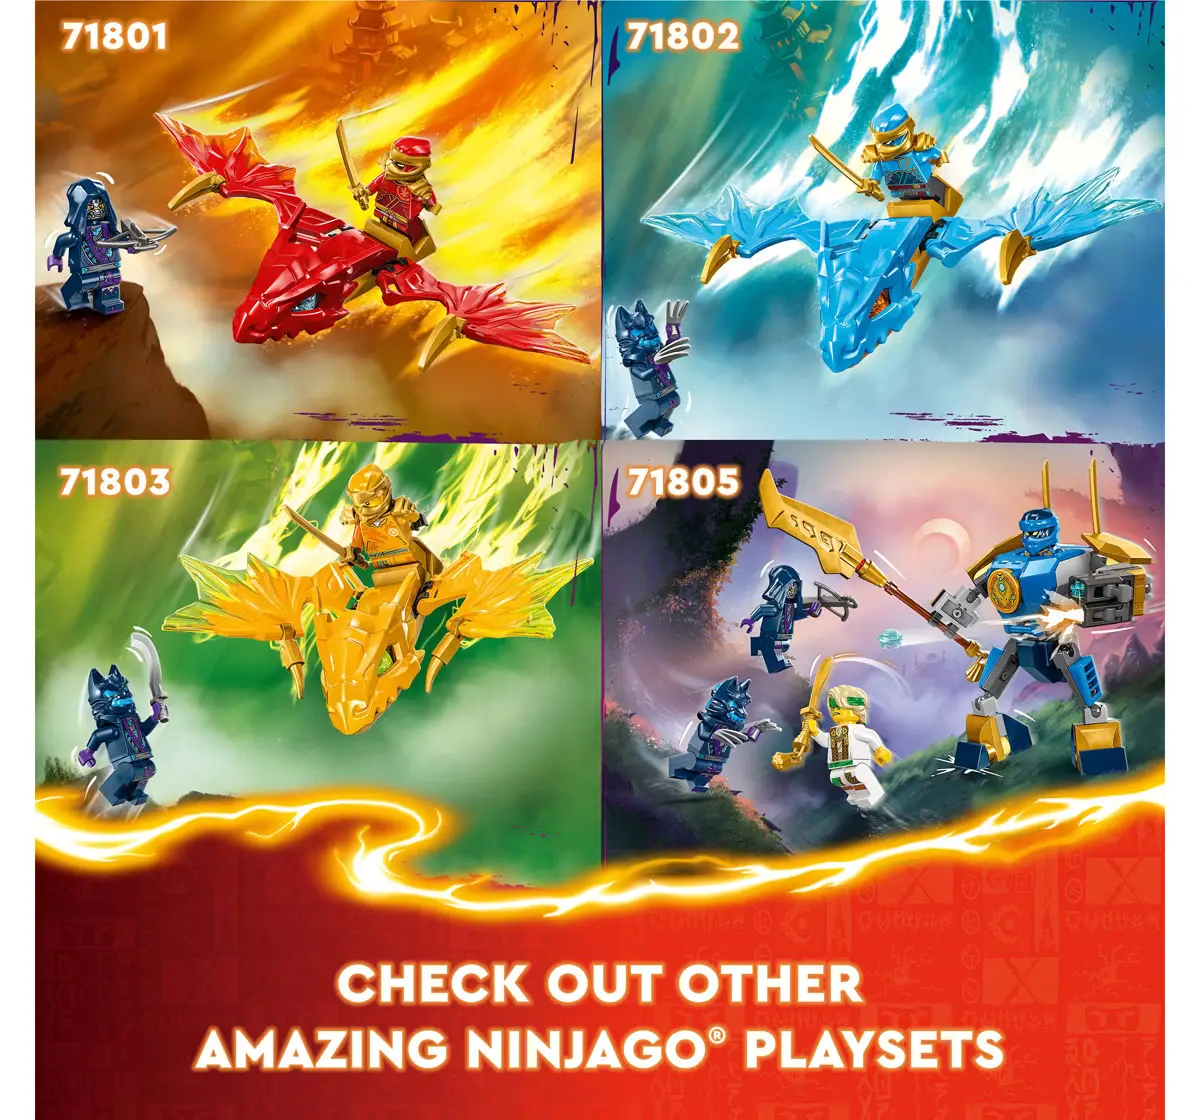 Lego Ninjago ArinS Battle Mech Ninja Toy Set 71804 Multicolour For Kids Ages 4Y+ (104 Pieces) 